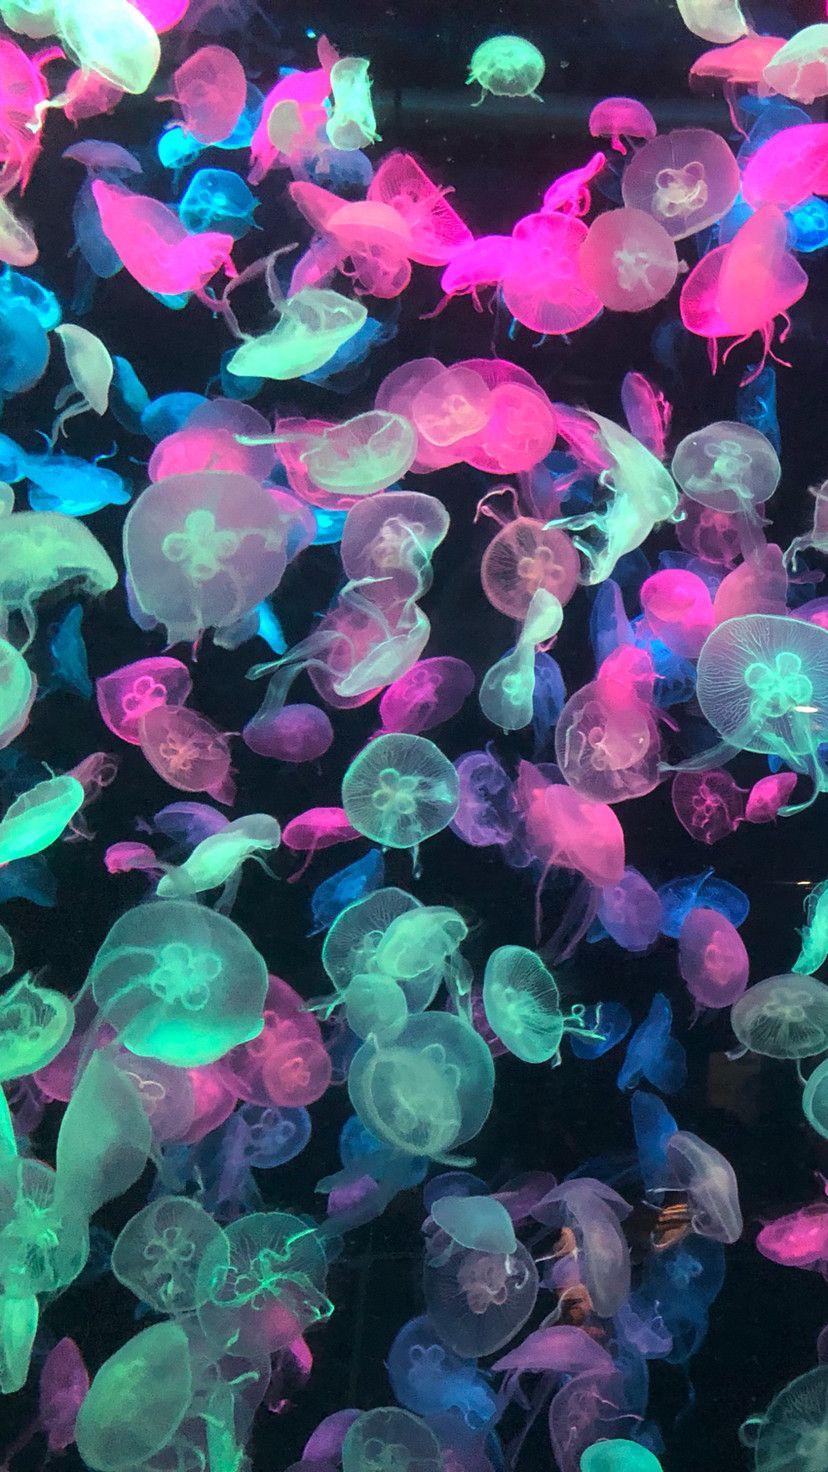 Jellyfish Wallpapers HD Free Download  PixelsTalkNet